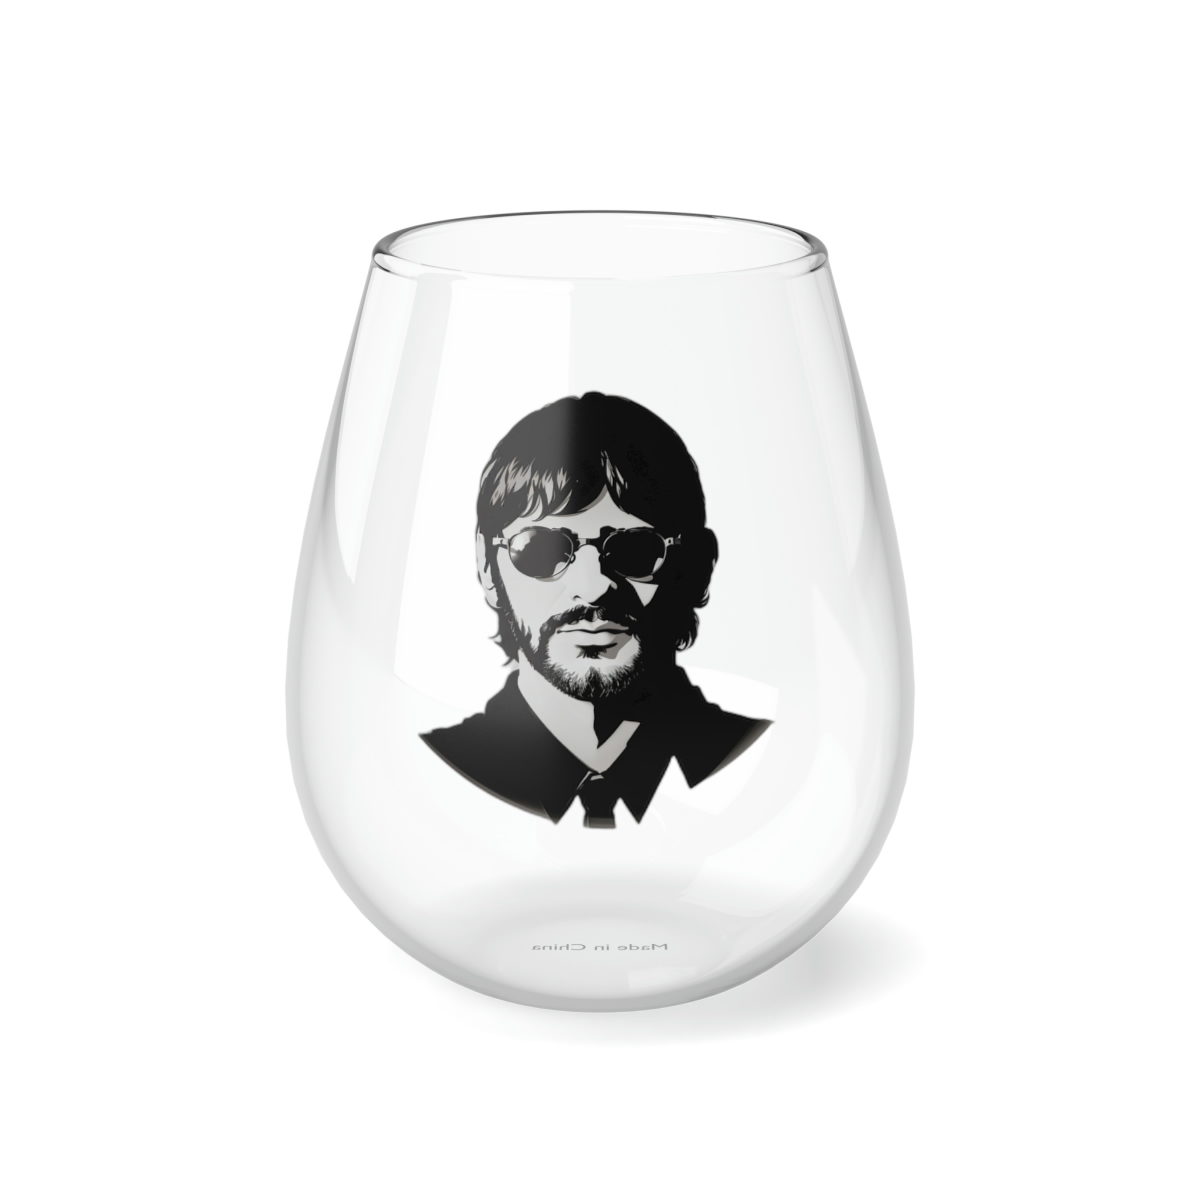 Personalized 11.75oz Ringo Starr Black and White Illustration Stemless Wine Glas - $23.69